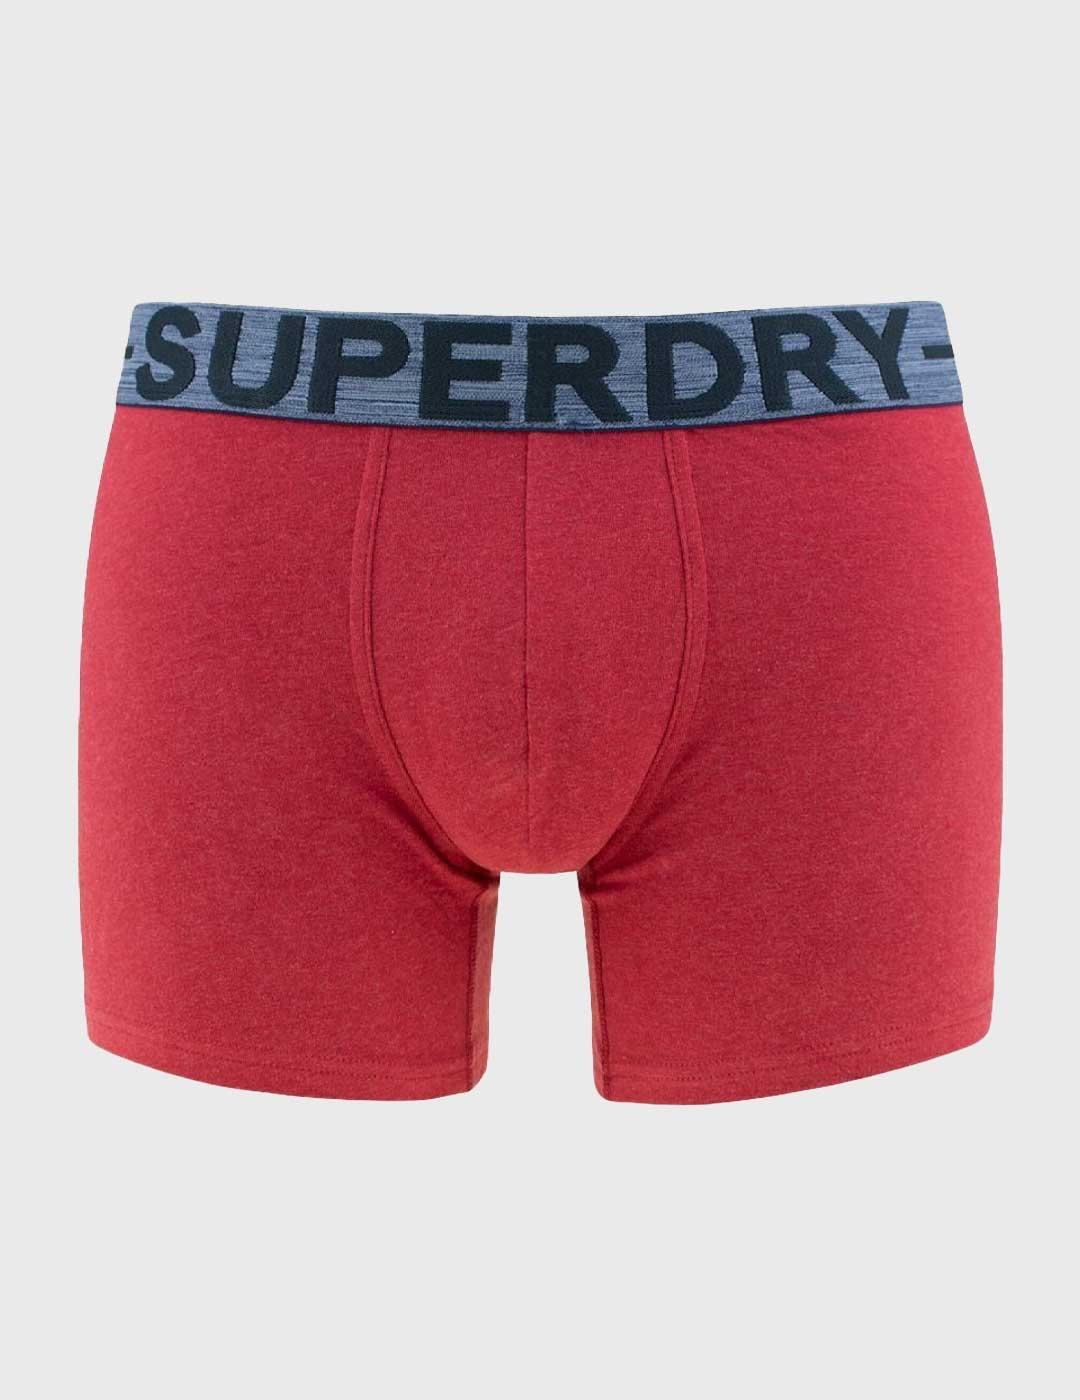 Superdry Boxer Triple Pack Calzoncillos rojos para hombre